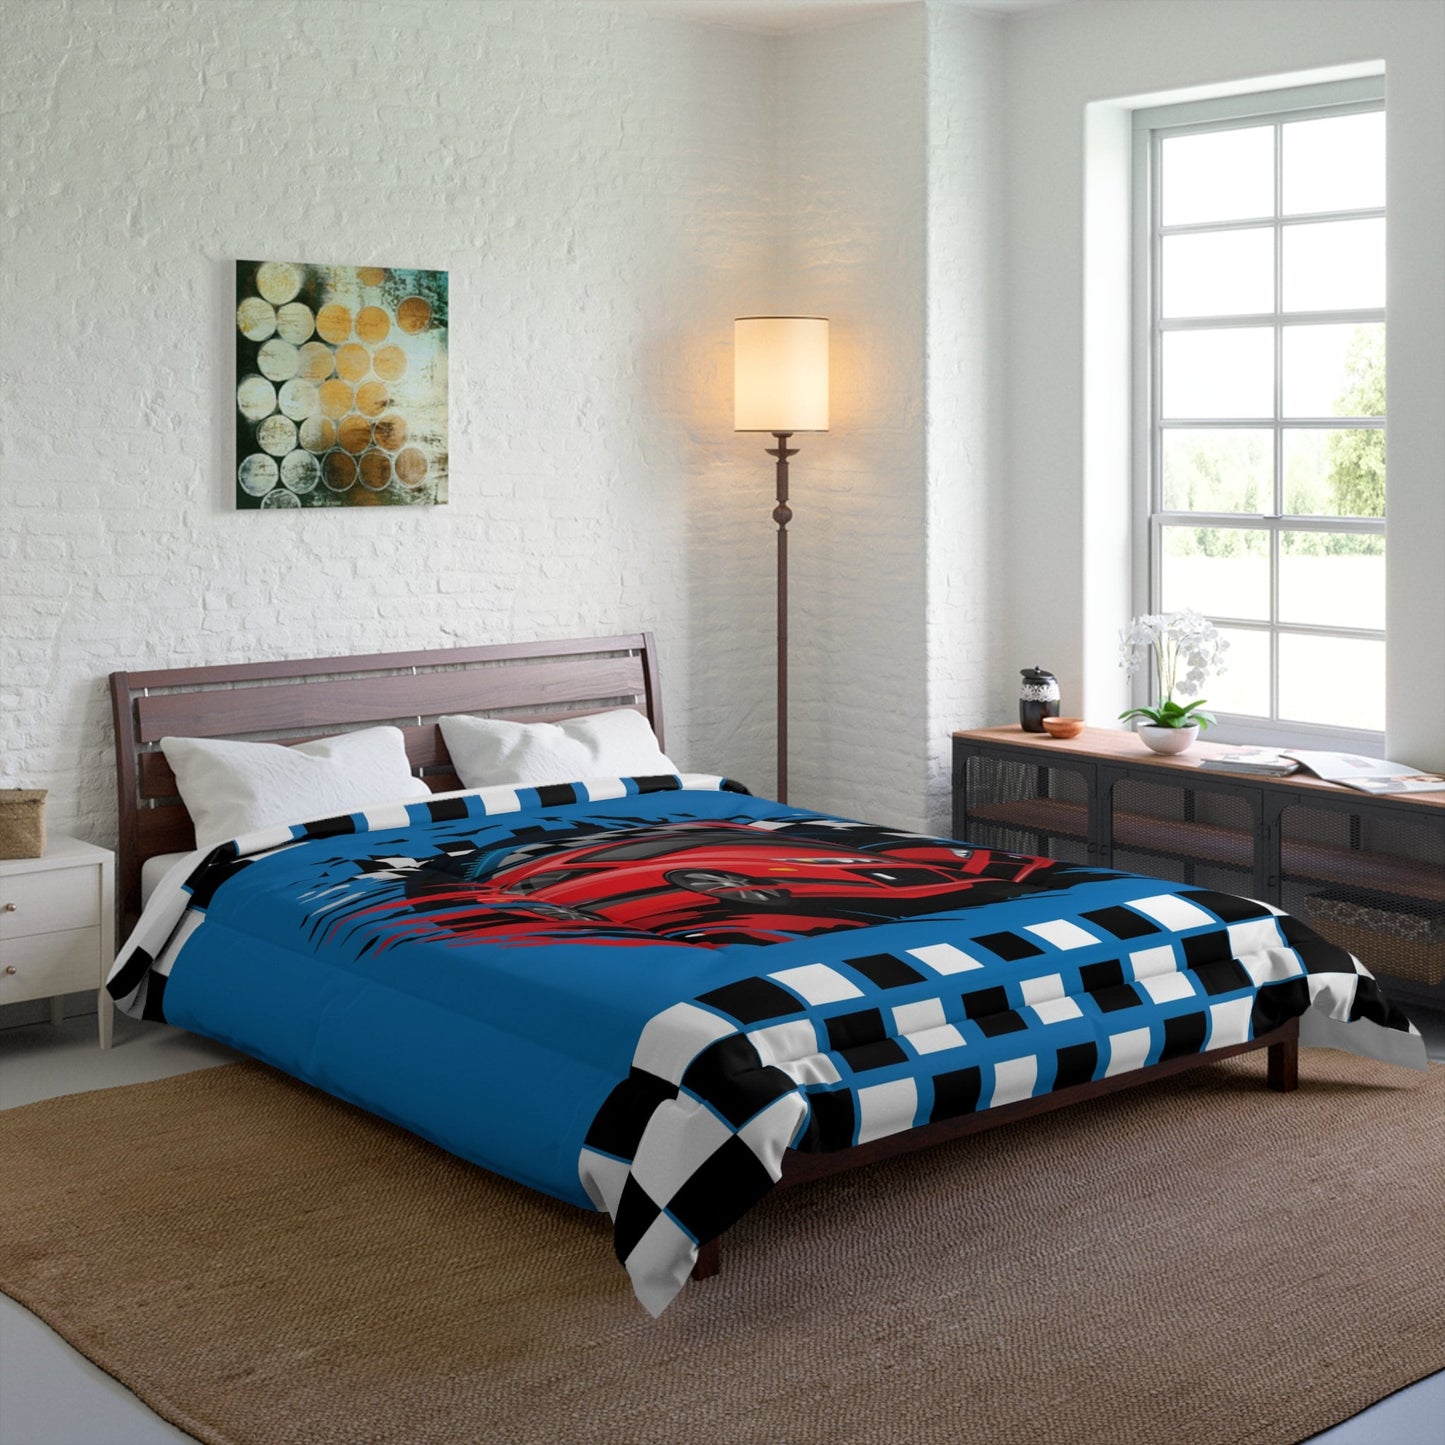 Car Racing Comforter or Duvet Cover kids bedding racetrack themed bedroom